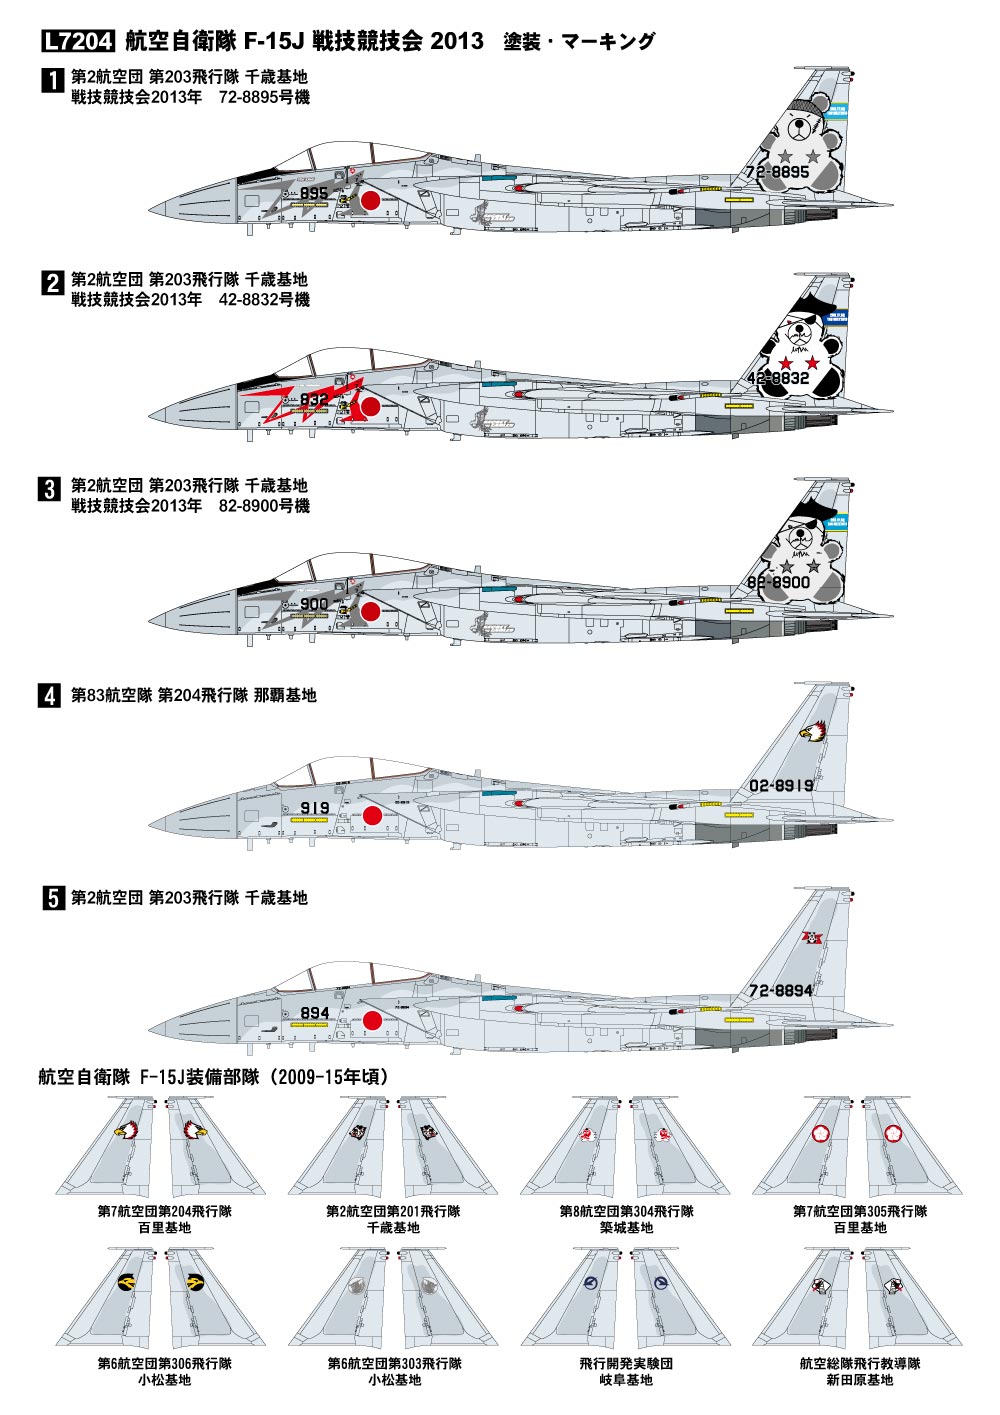 1/72　F-15J 航空自衛隊 戦技競技会 2013